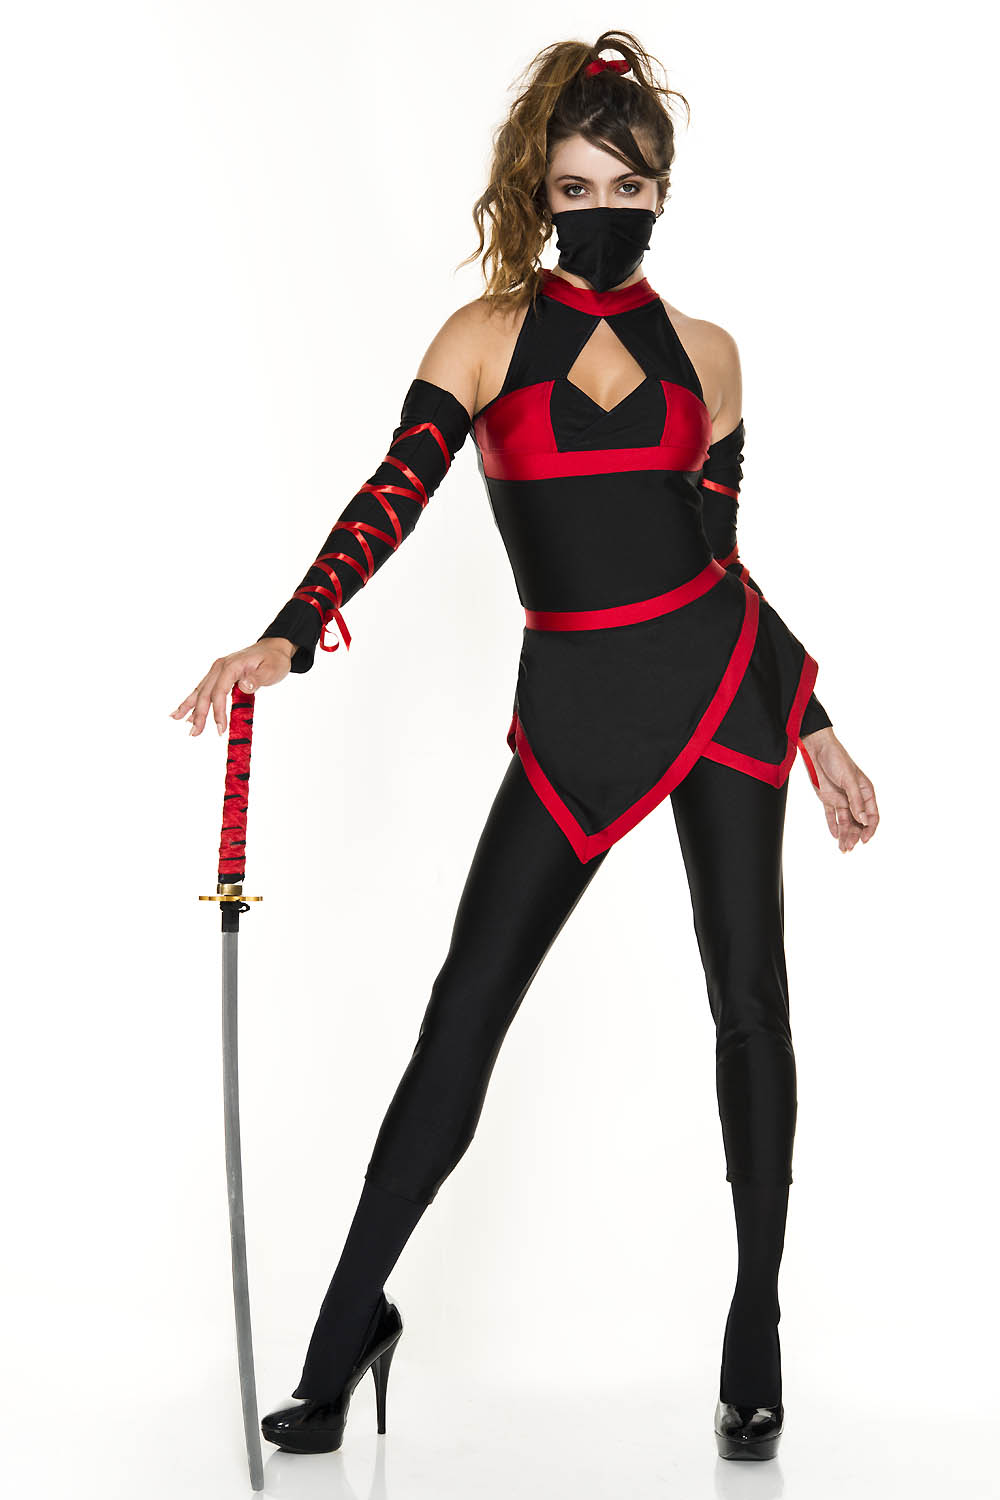 Adult Walker of Shadows Woman Ninja Costume